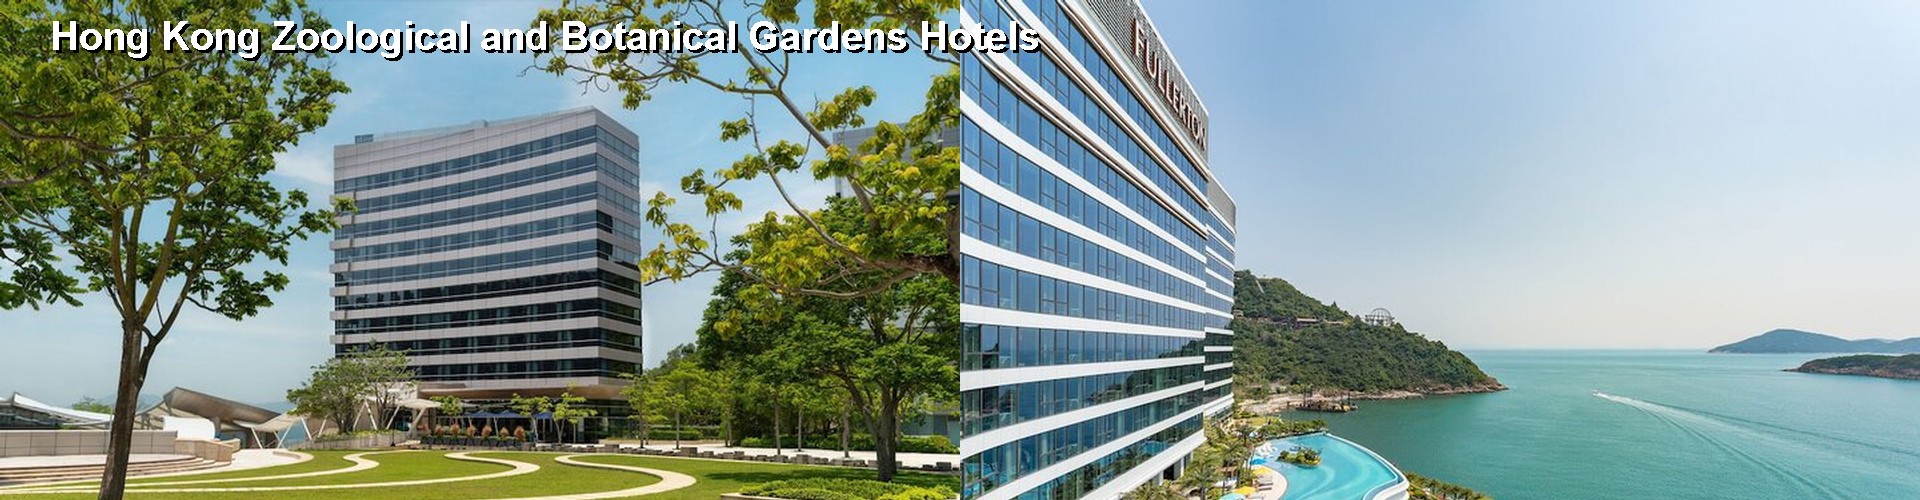 5 Best Hotels near Hong Kong Zoological and Botanical Gardens